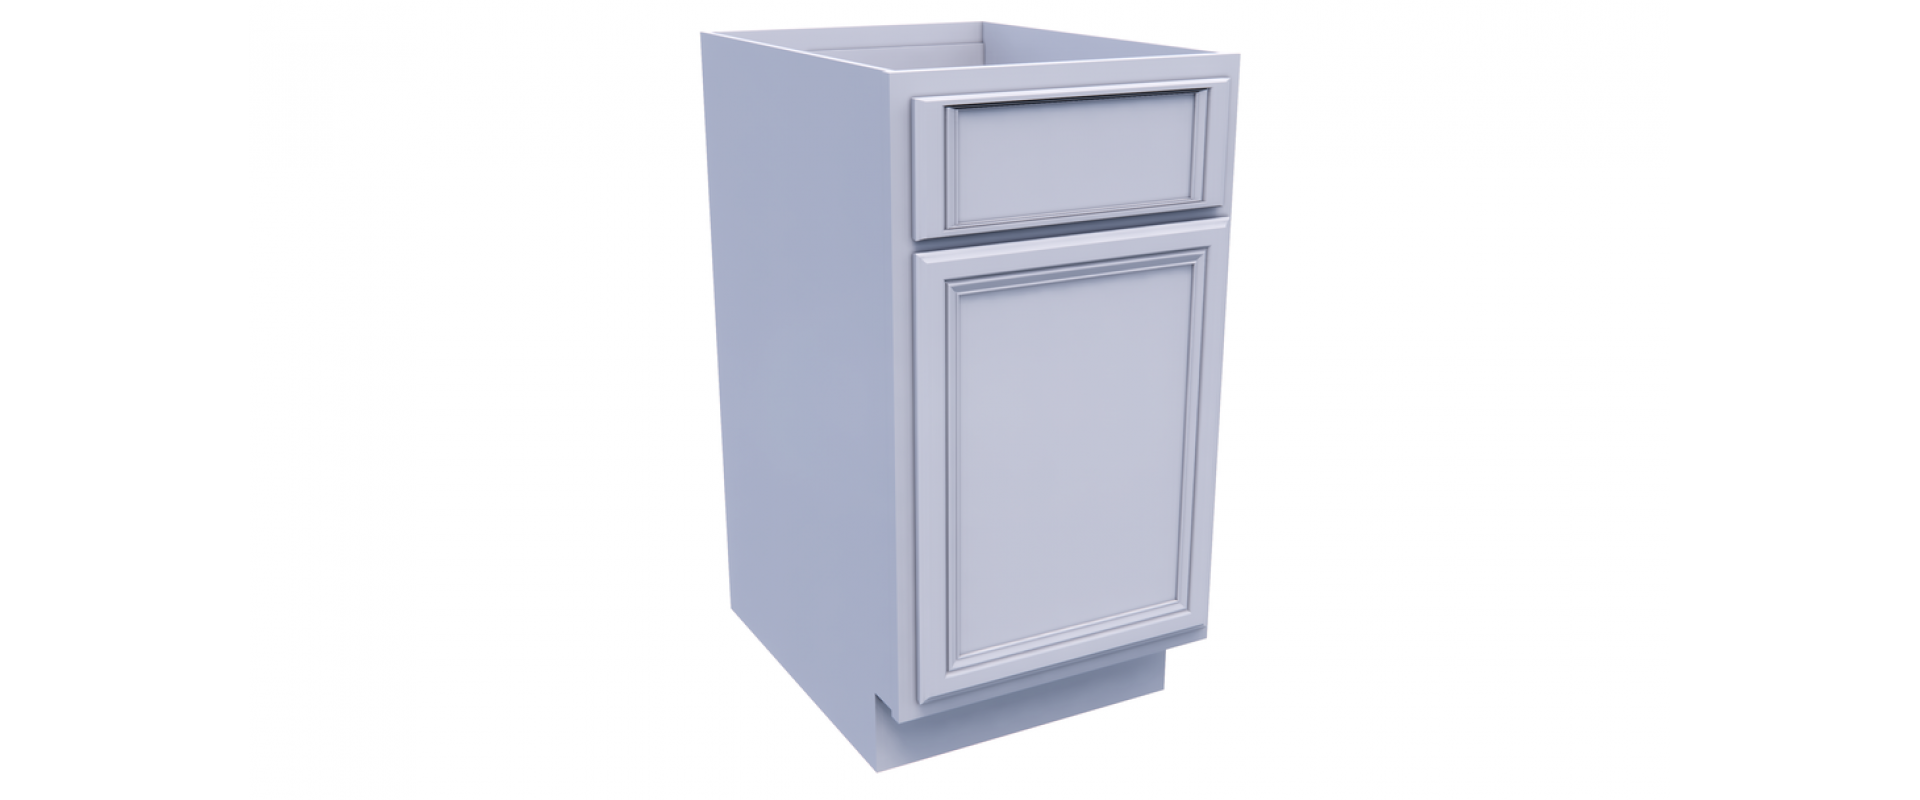 Antique White Single Door Base Cabinet 21'X34.5'